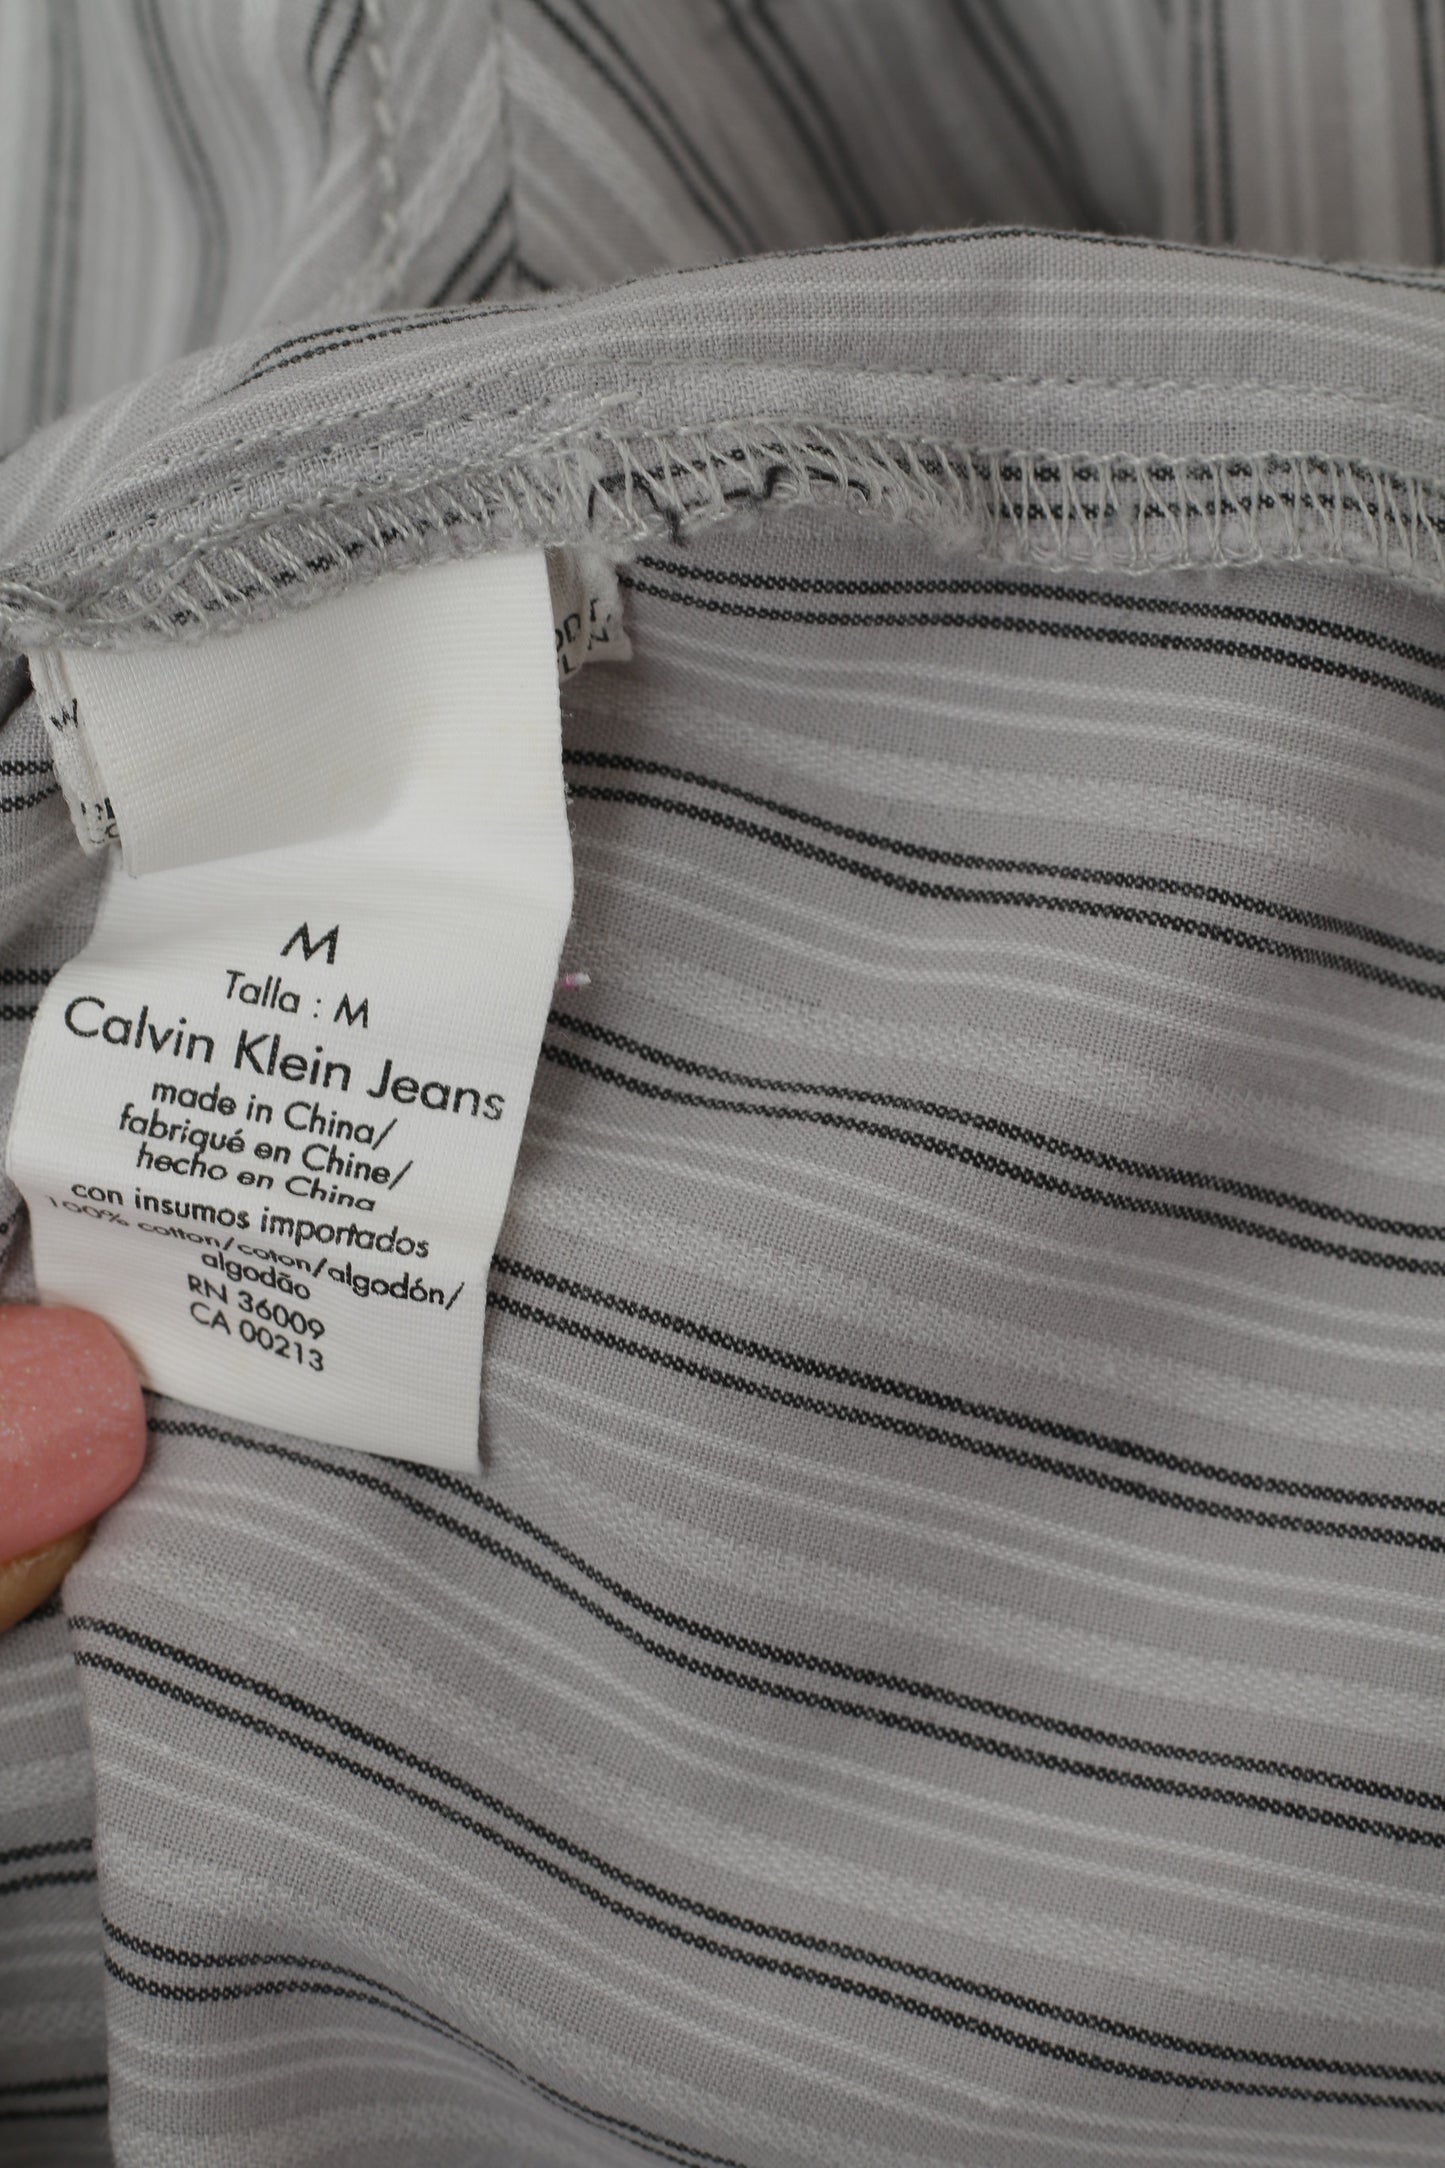 Calvin Klein Jeans Men M Casual Shirt Gray Striped Cotton Long Sleeve Top